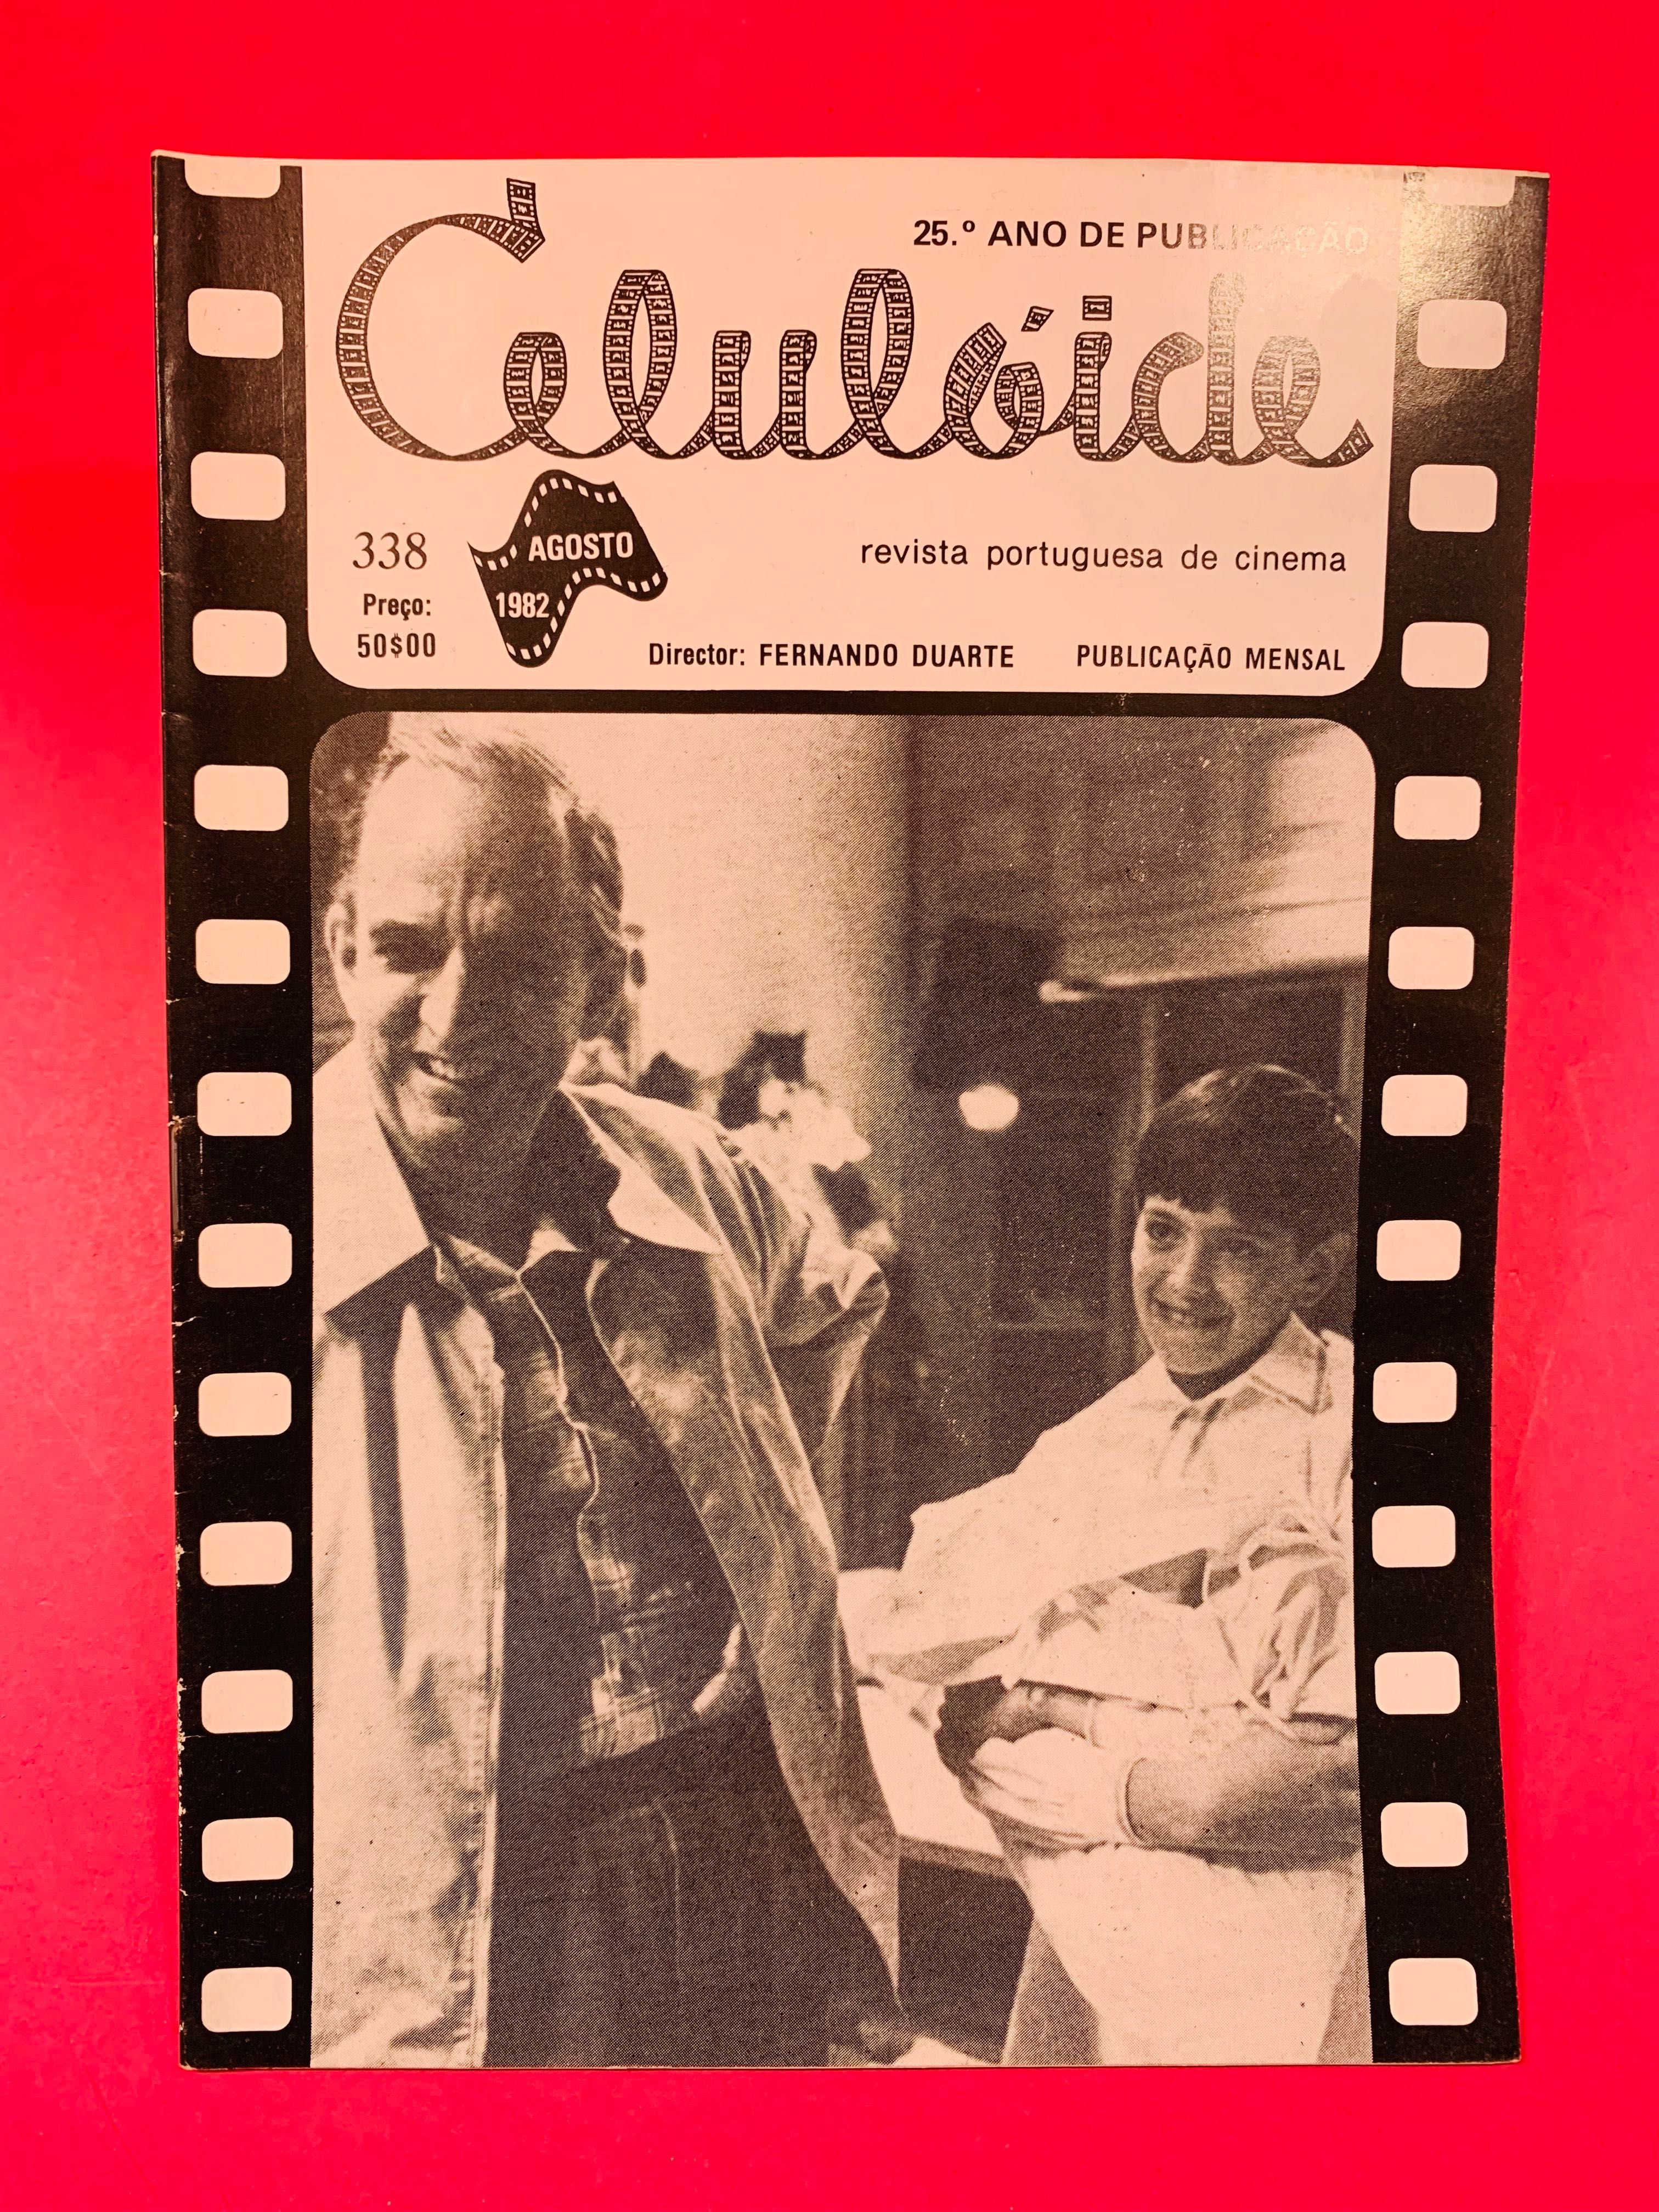 Celulóide - Revista Portuguesa de Cinema Nº338 Ano 1982